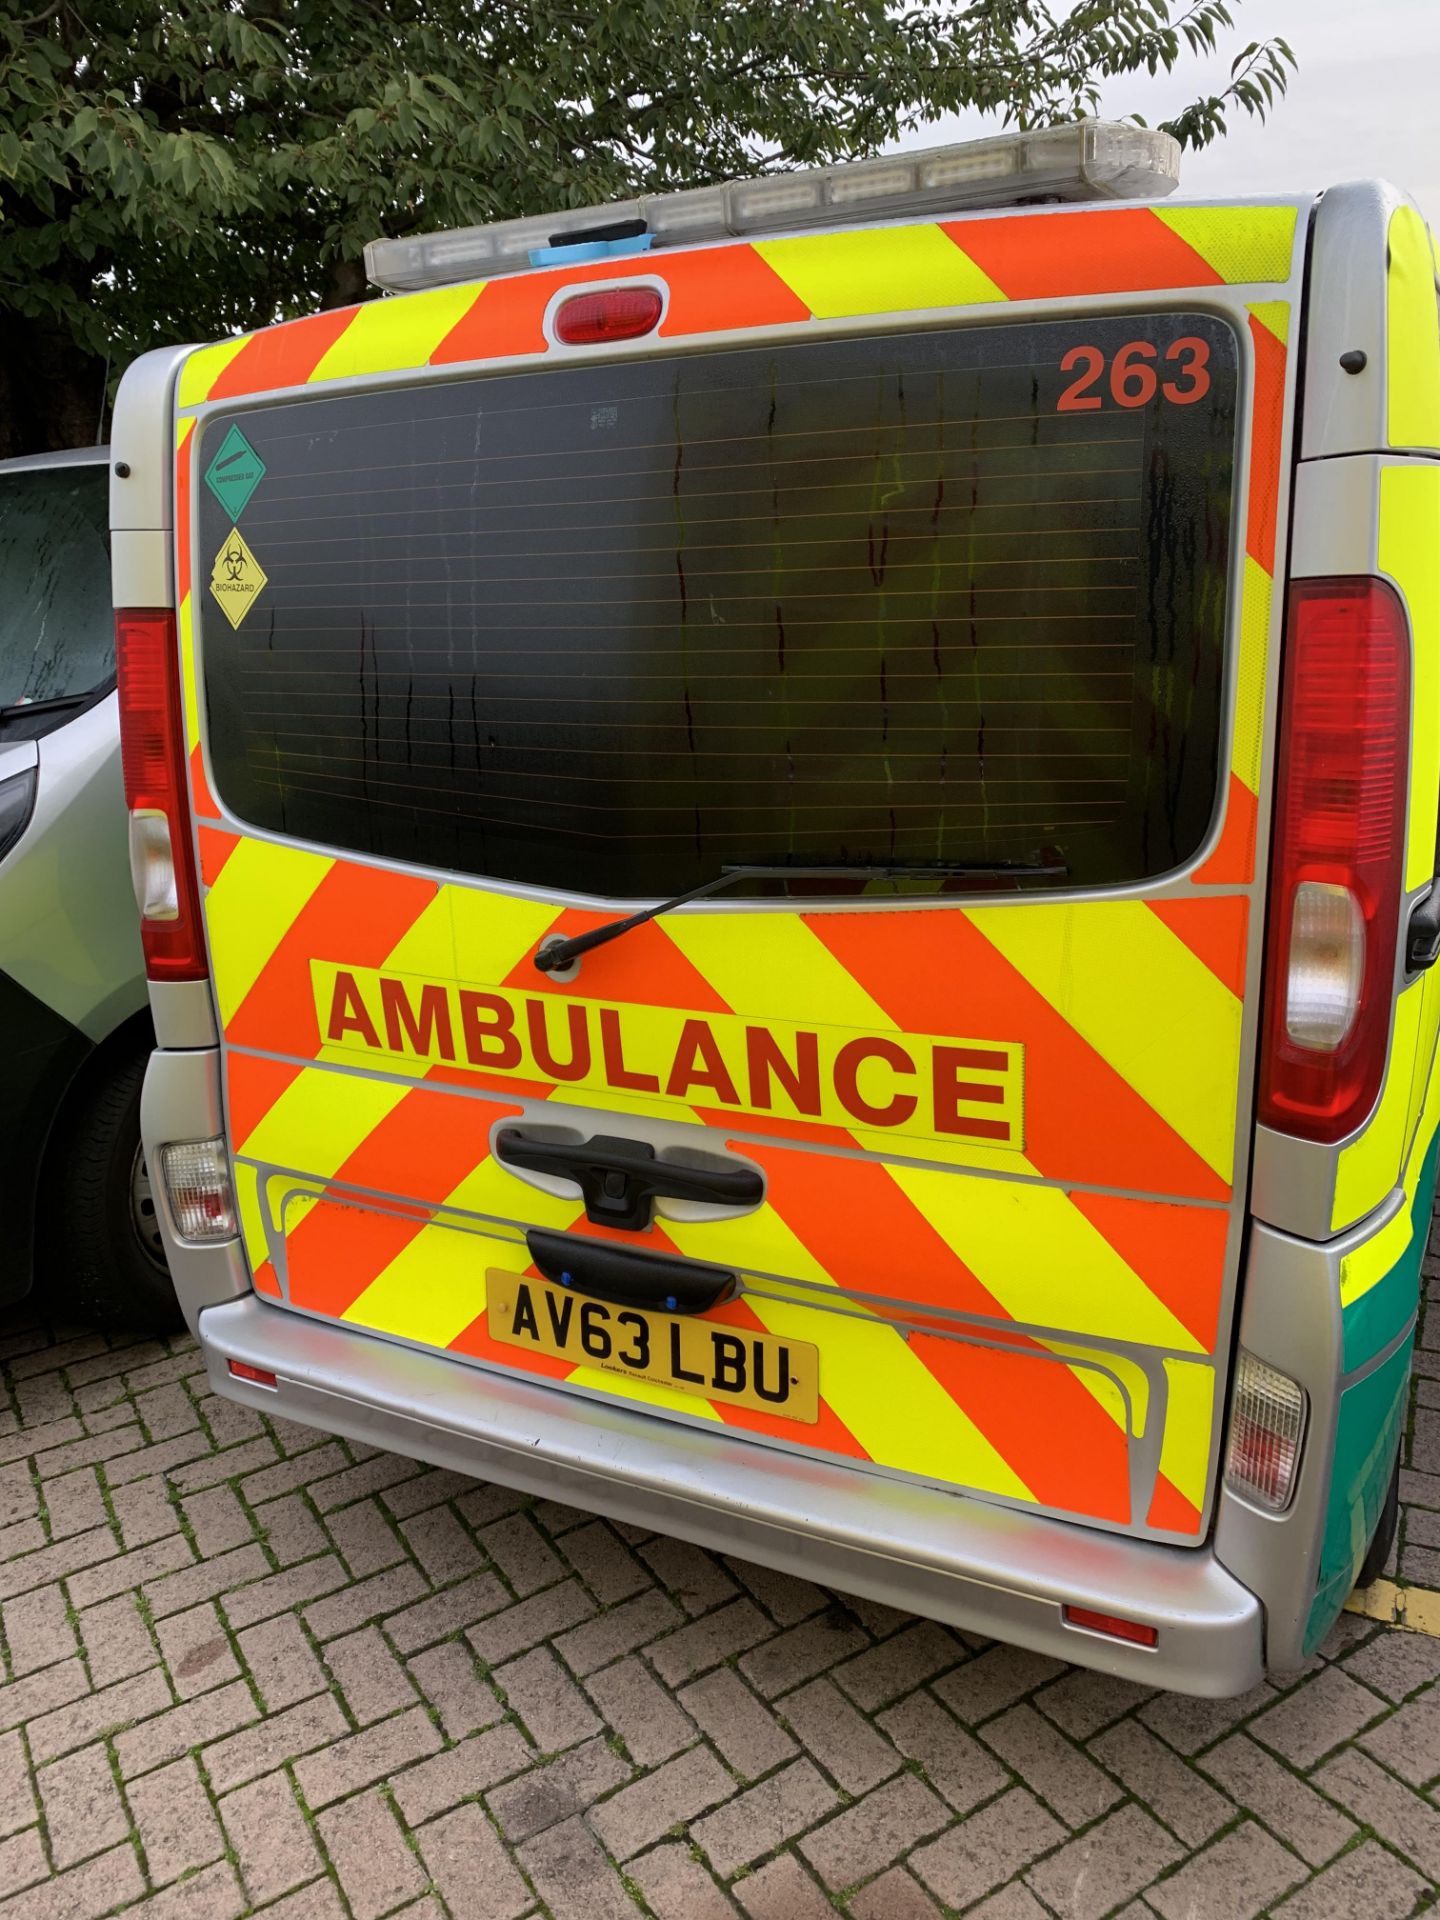 Renault Trafic LL29 DCI medical support minibus, 9 seater registration number AV63 LBU, recorded - Image 4 of 11